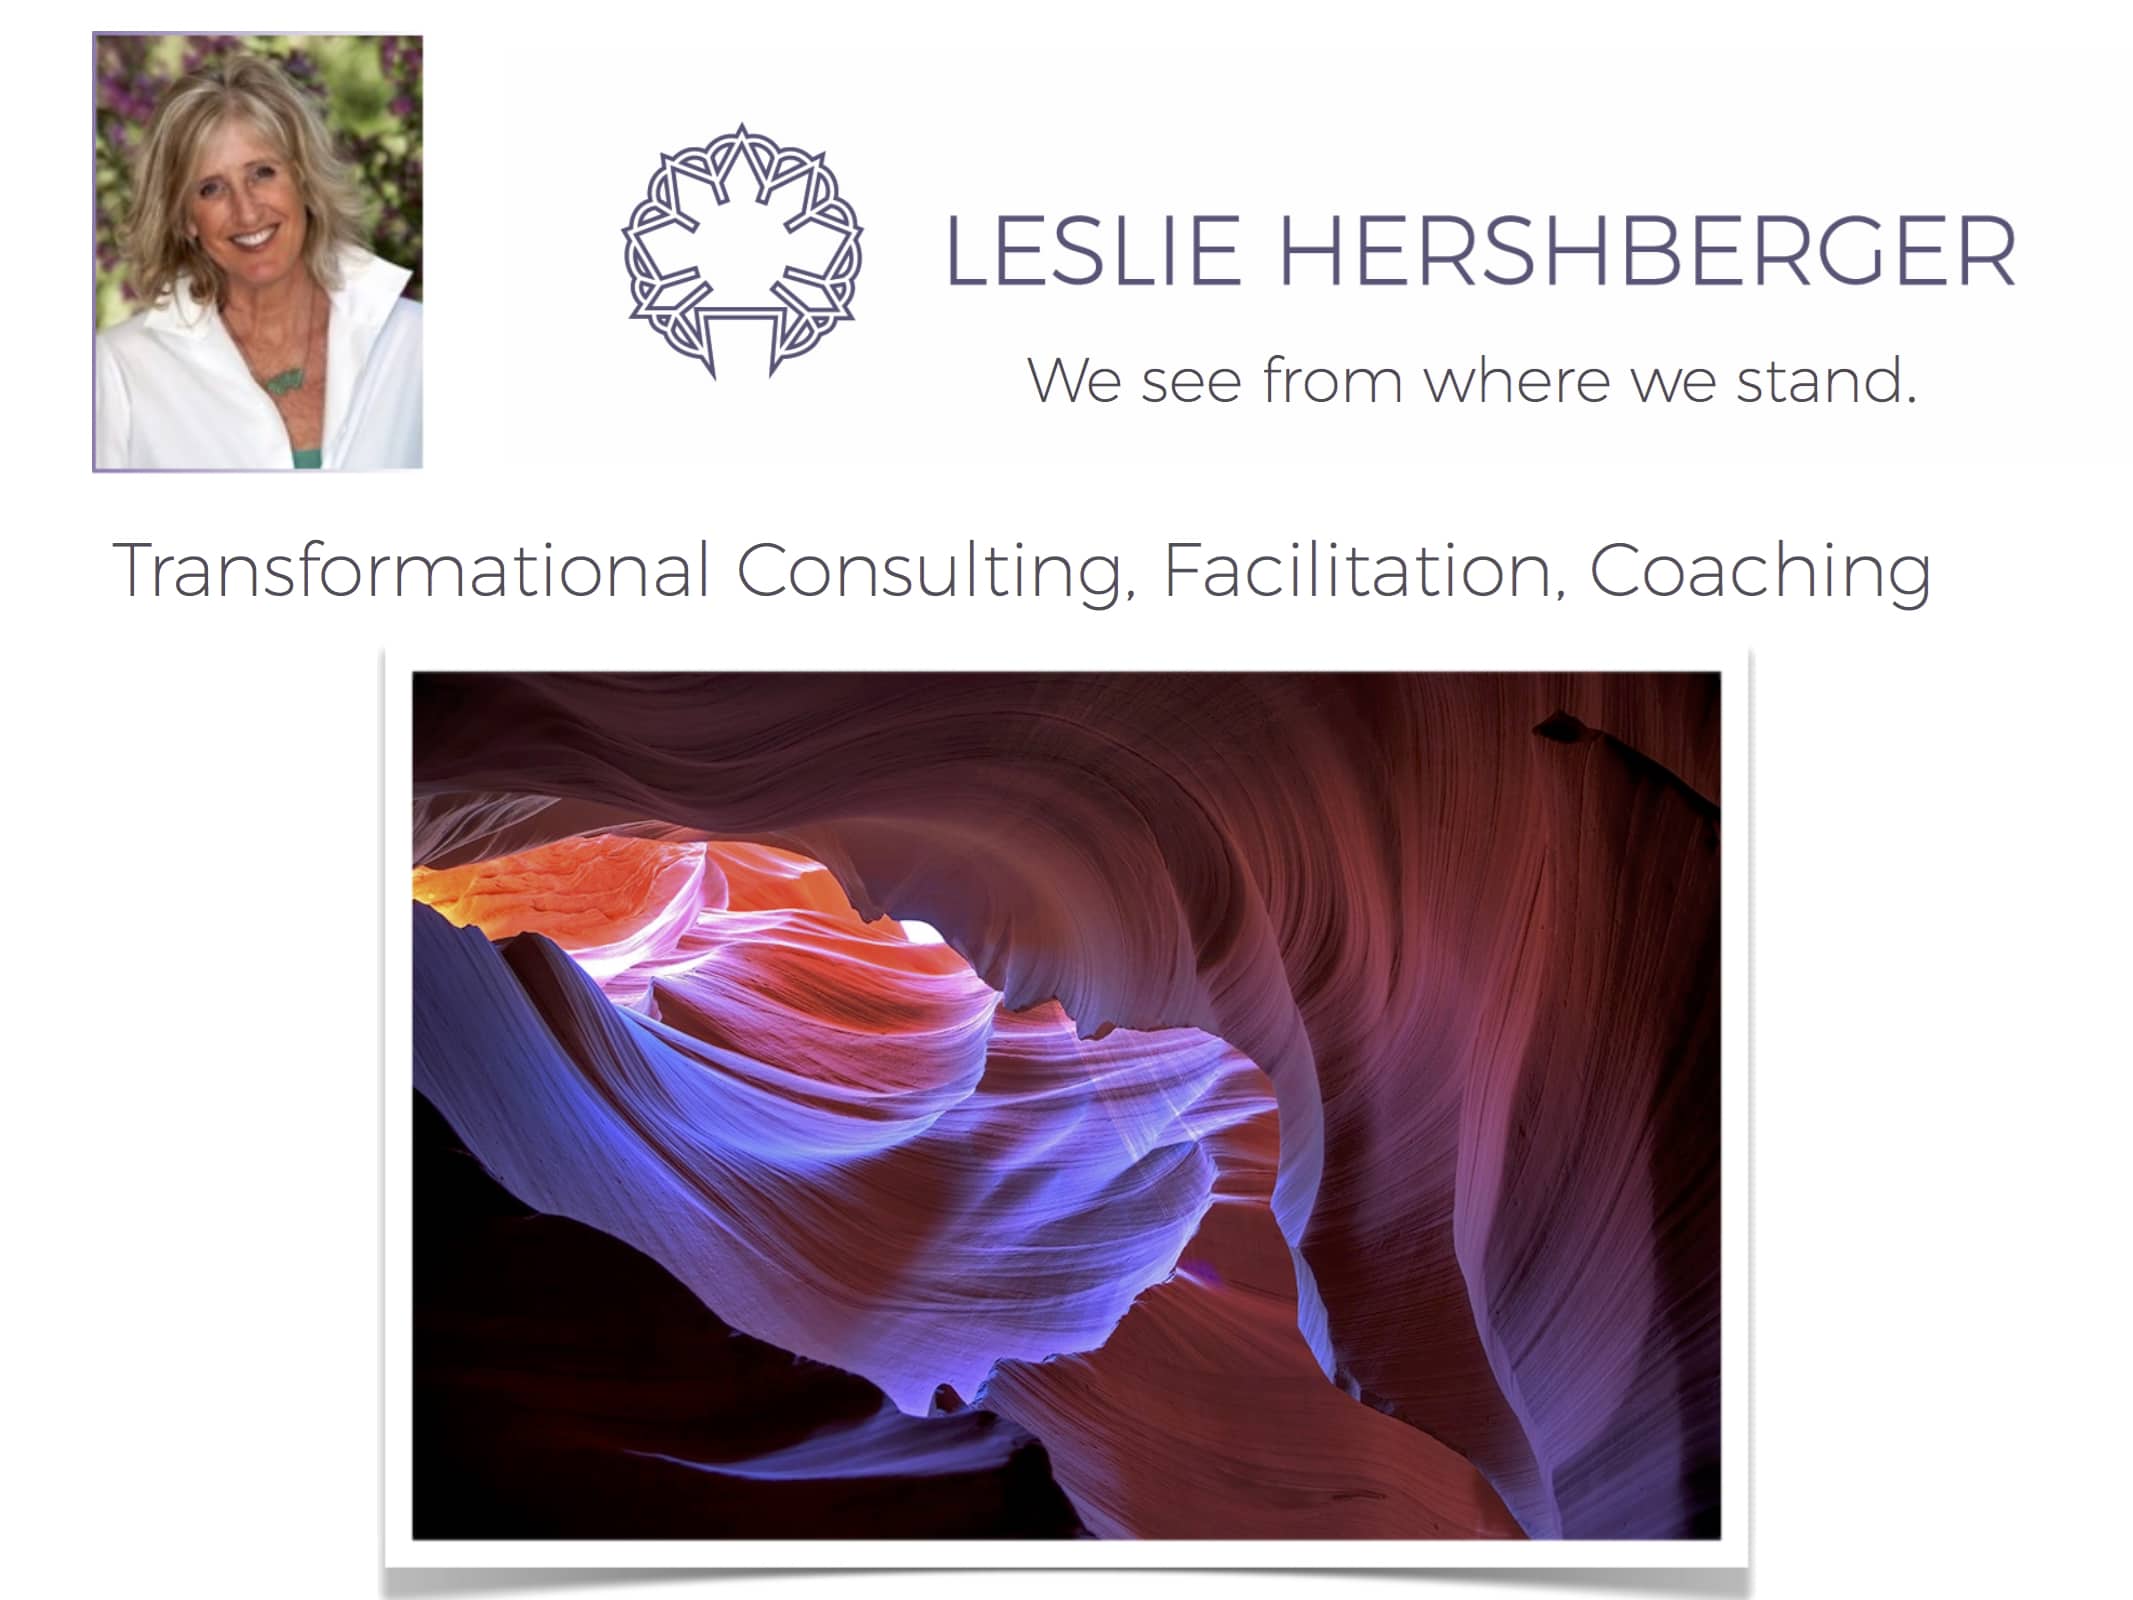 Leslie Hershberger